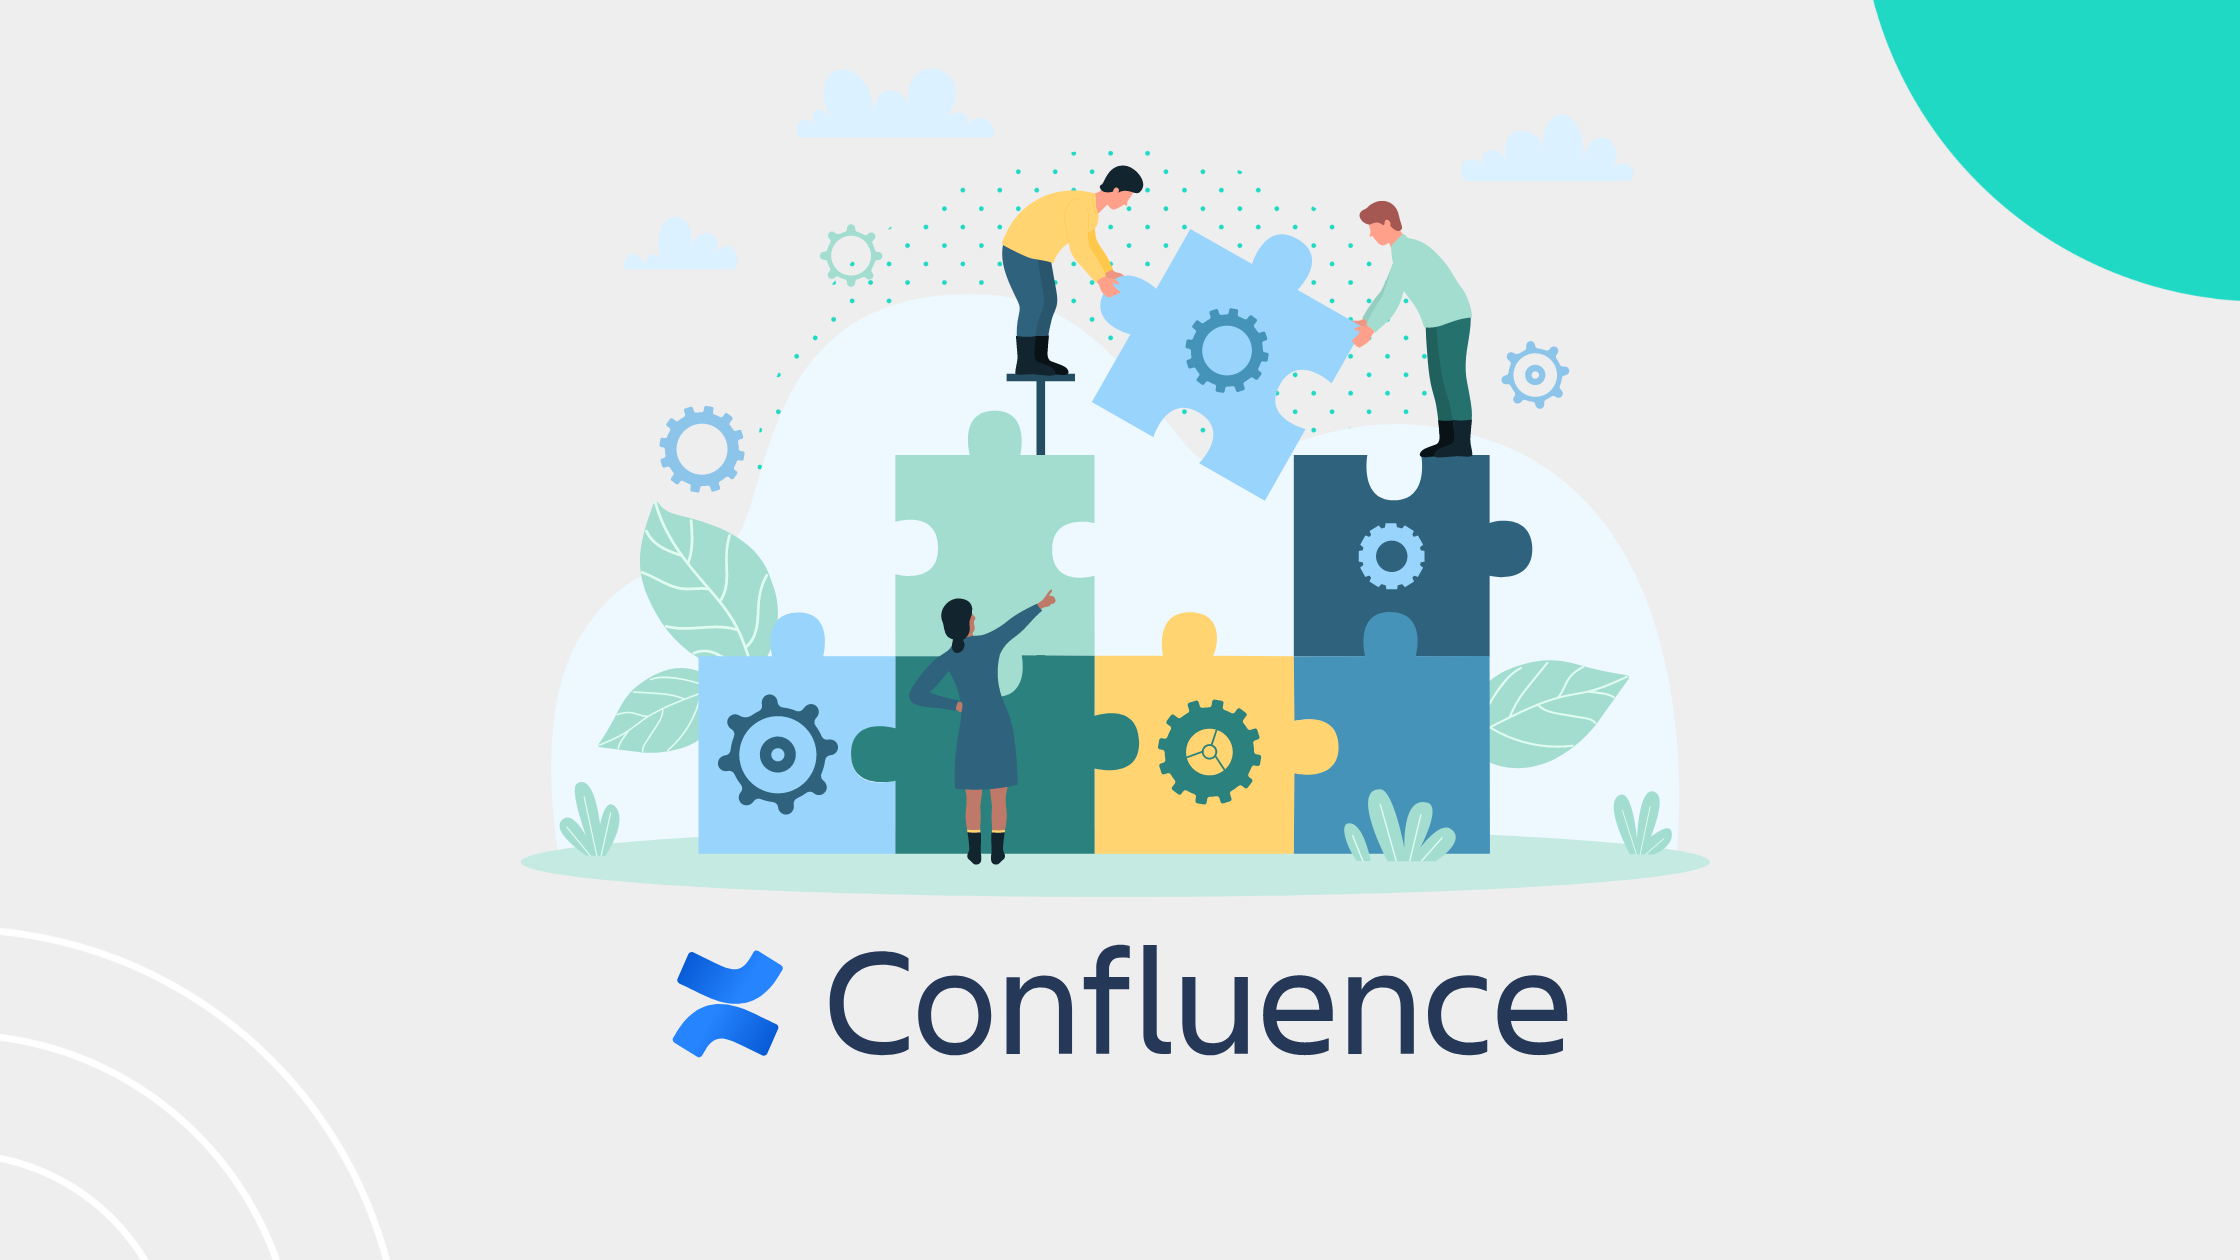 Confluence as collaboration platform